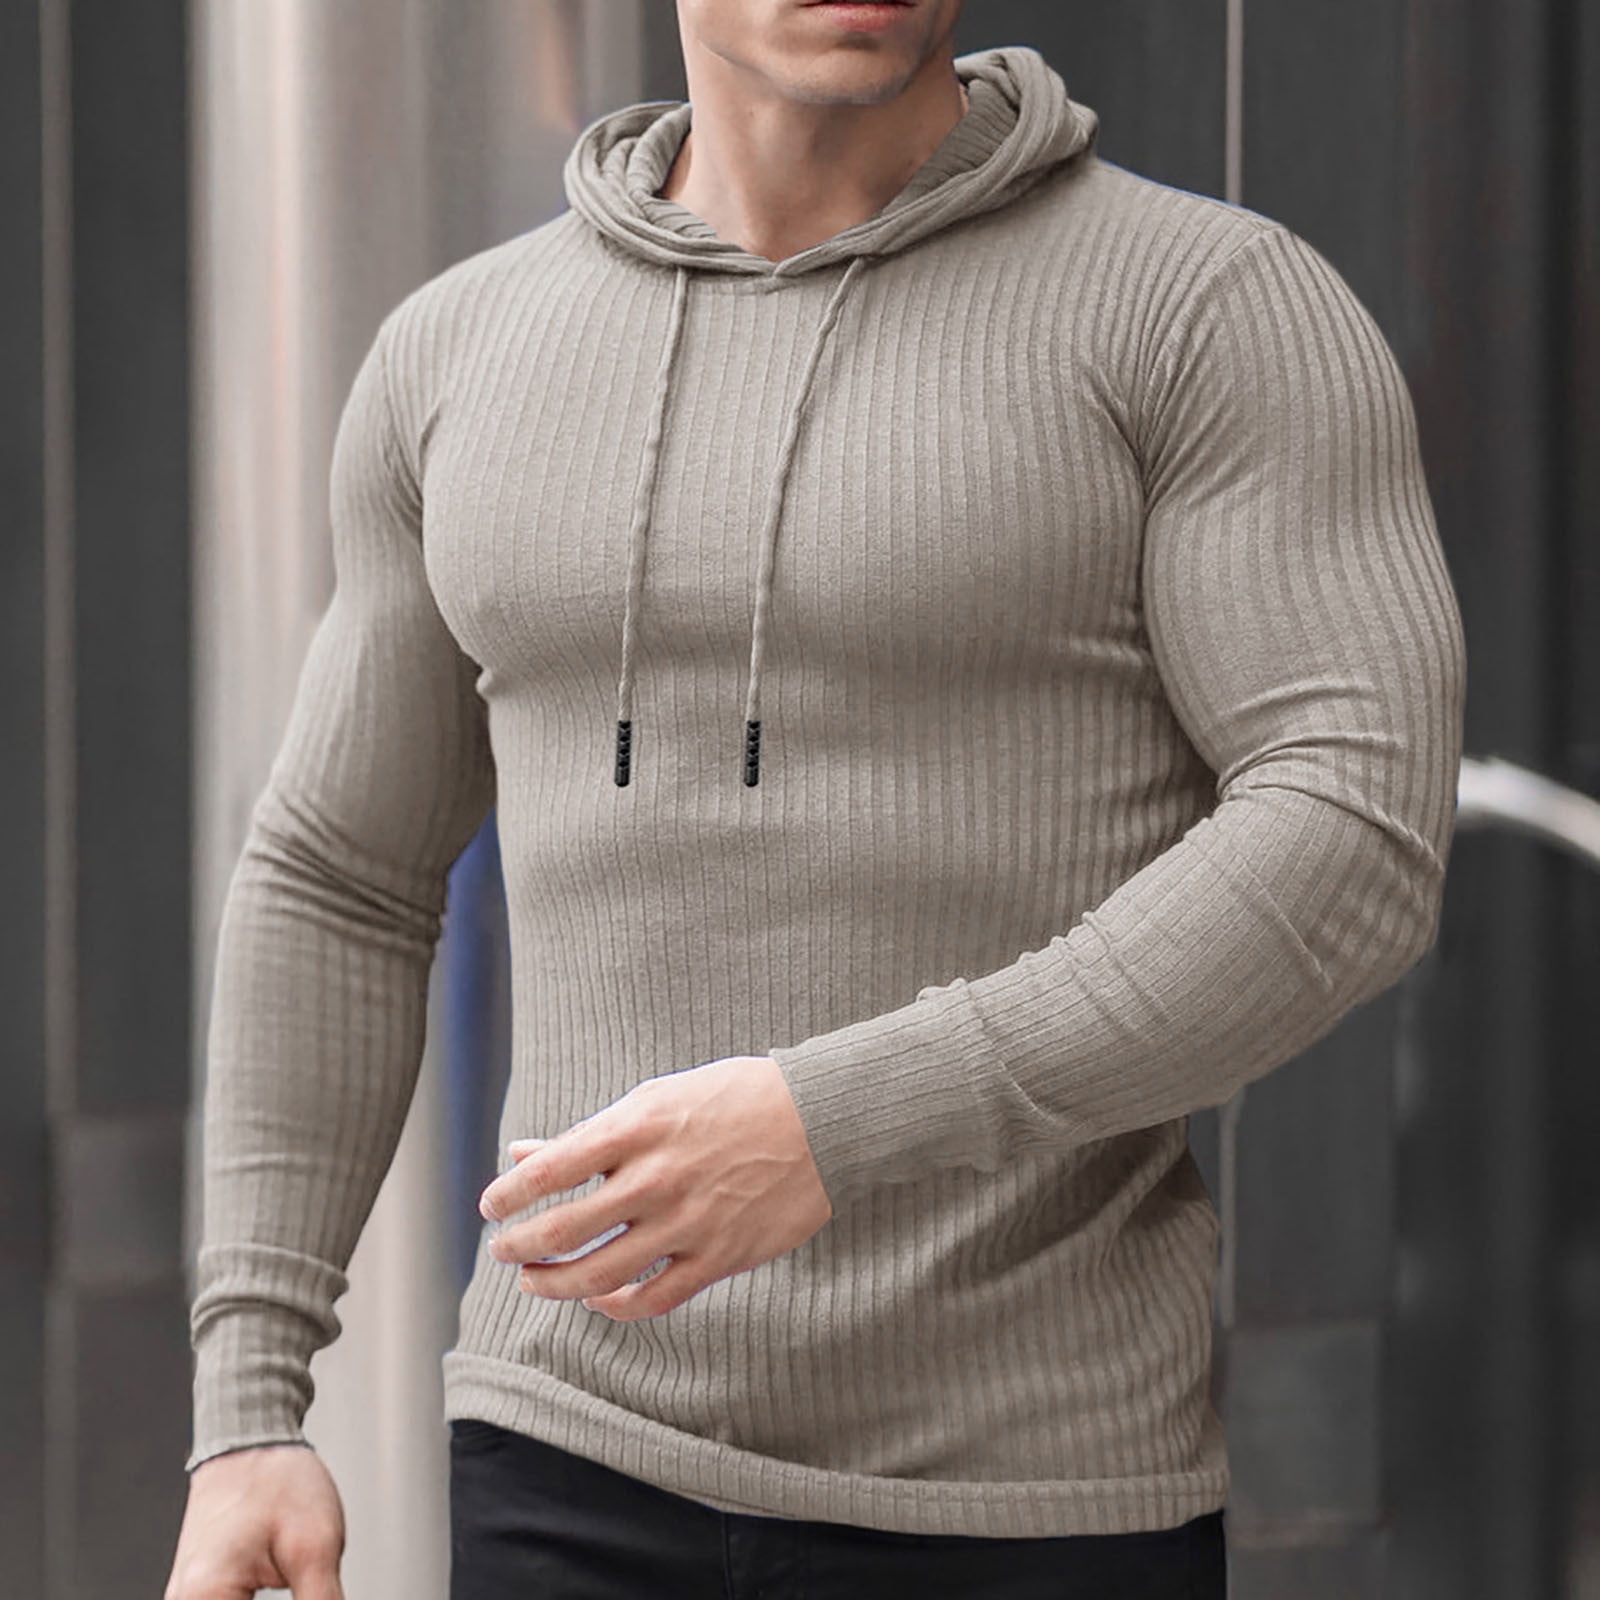 Buy online Mens Plain Sweatshirt from top wear for Men by Fitkin